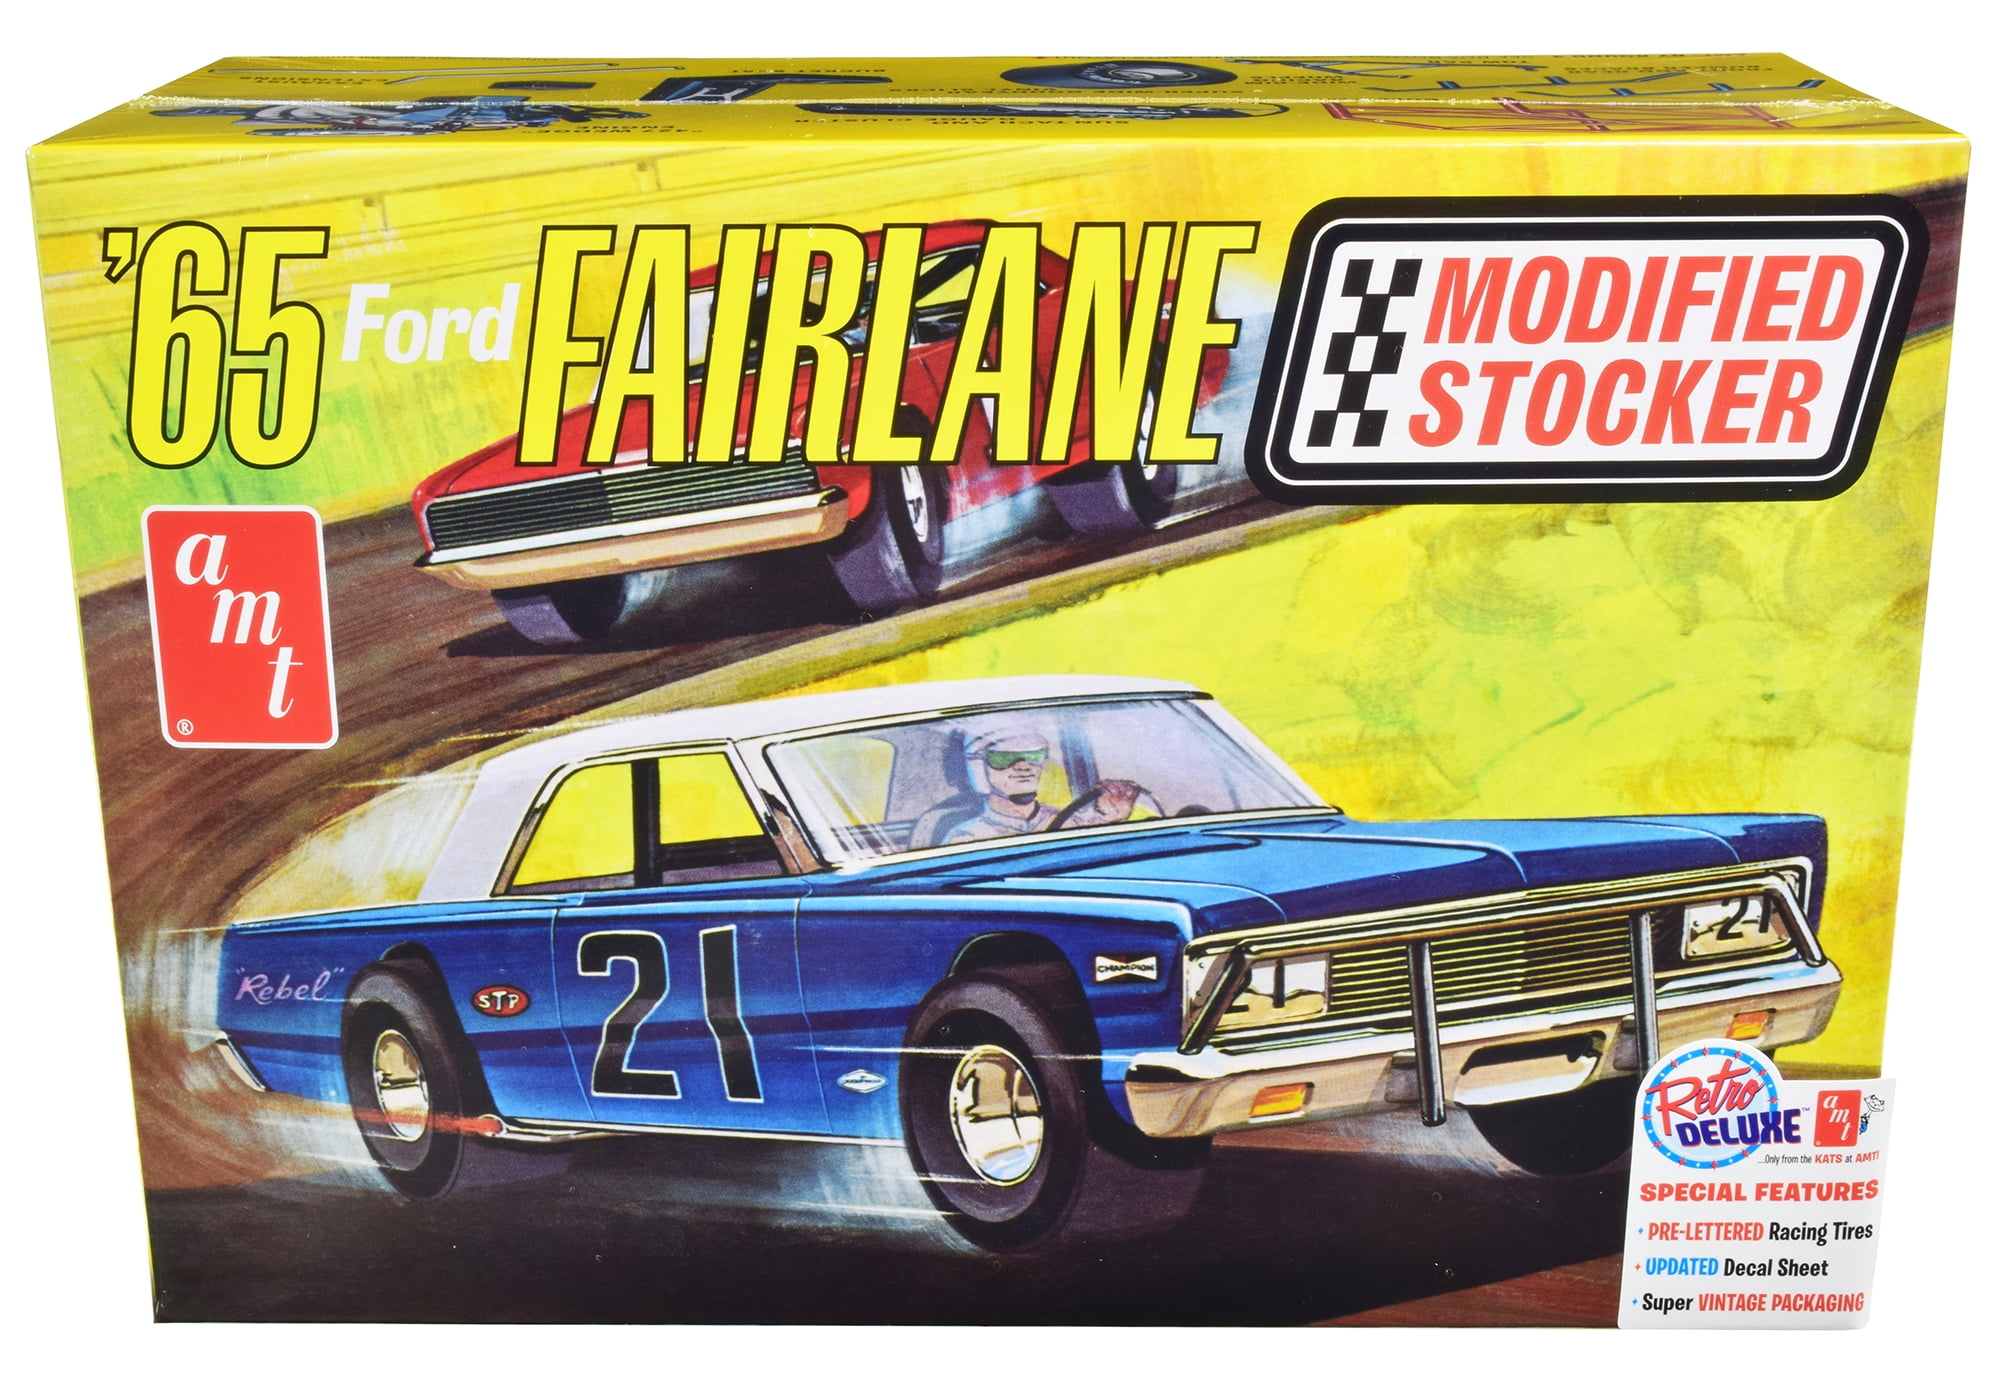 65 1965 Ford Fairlane 500 Modified Stocker 1/25 Race Car Roll Cage Interior Tub 